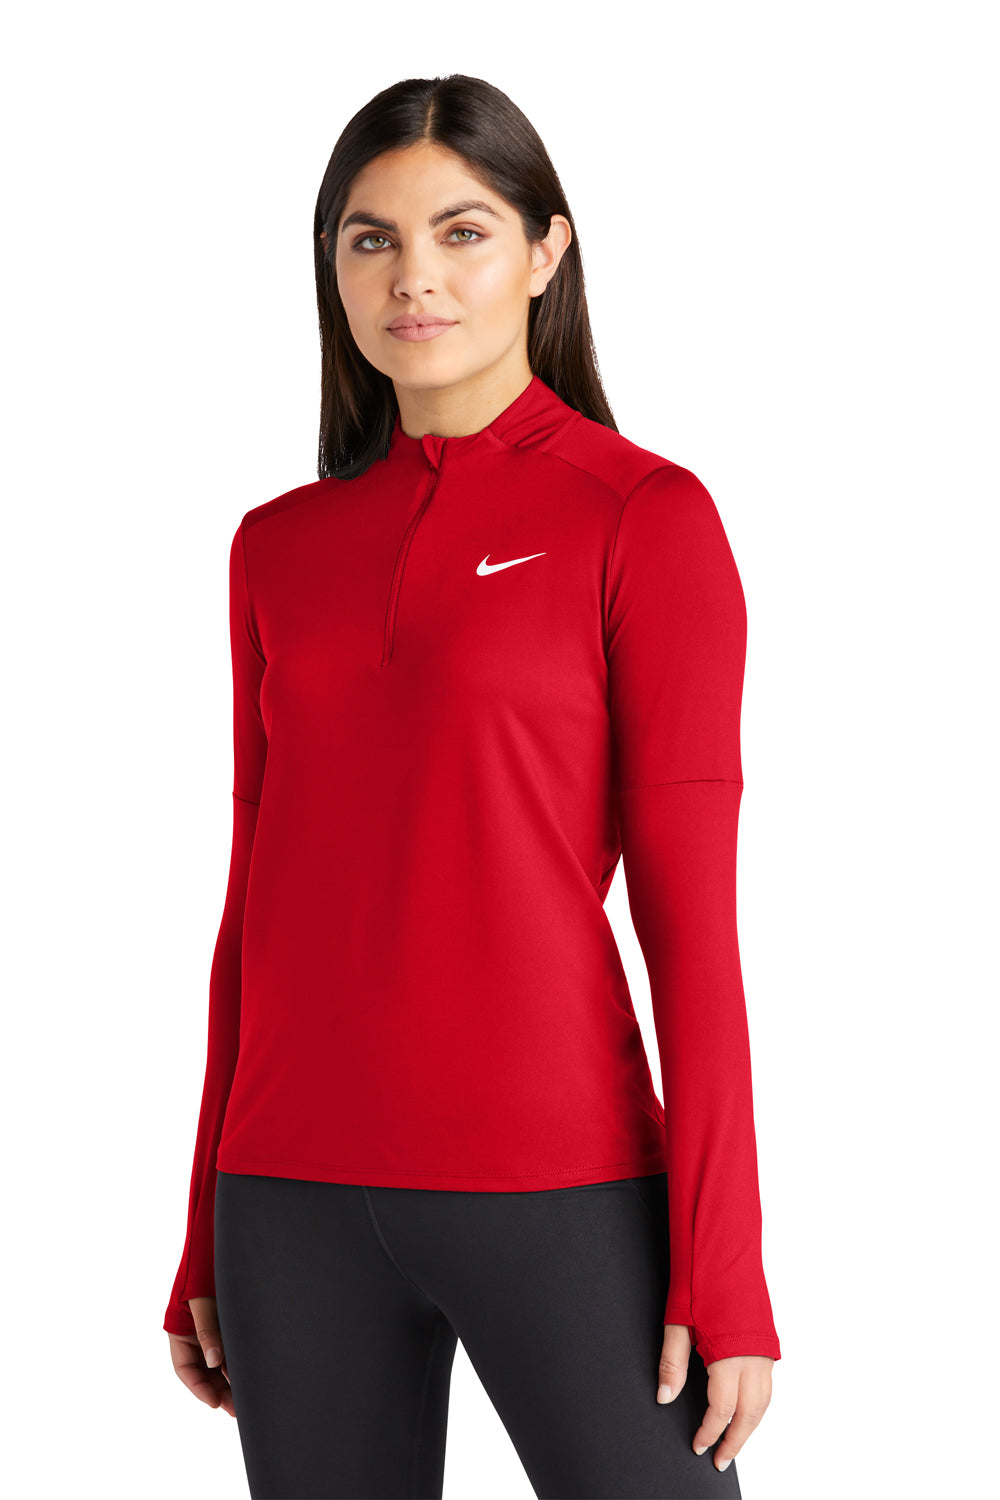 Nike NKDH4951 Womens Element Dri-Fit Moisture Wicking 1/4 Zip Sweatshirt Scarlet Red Model 3Q